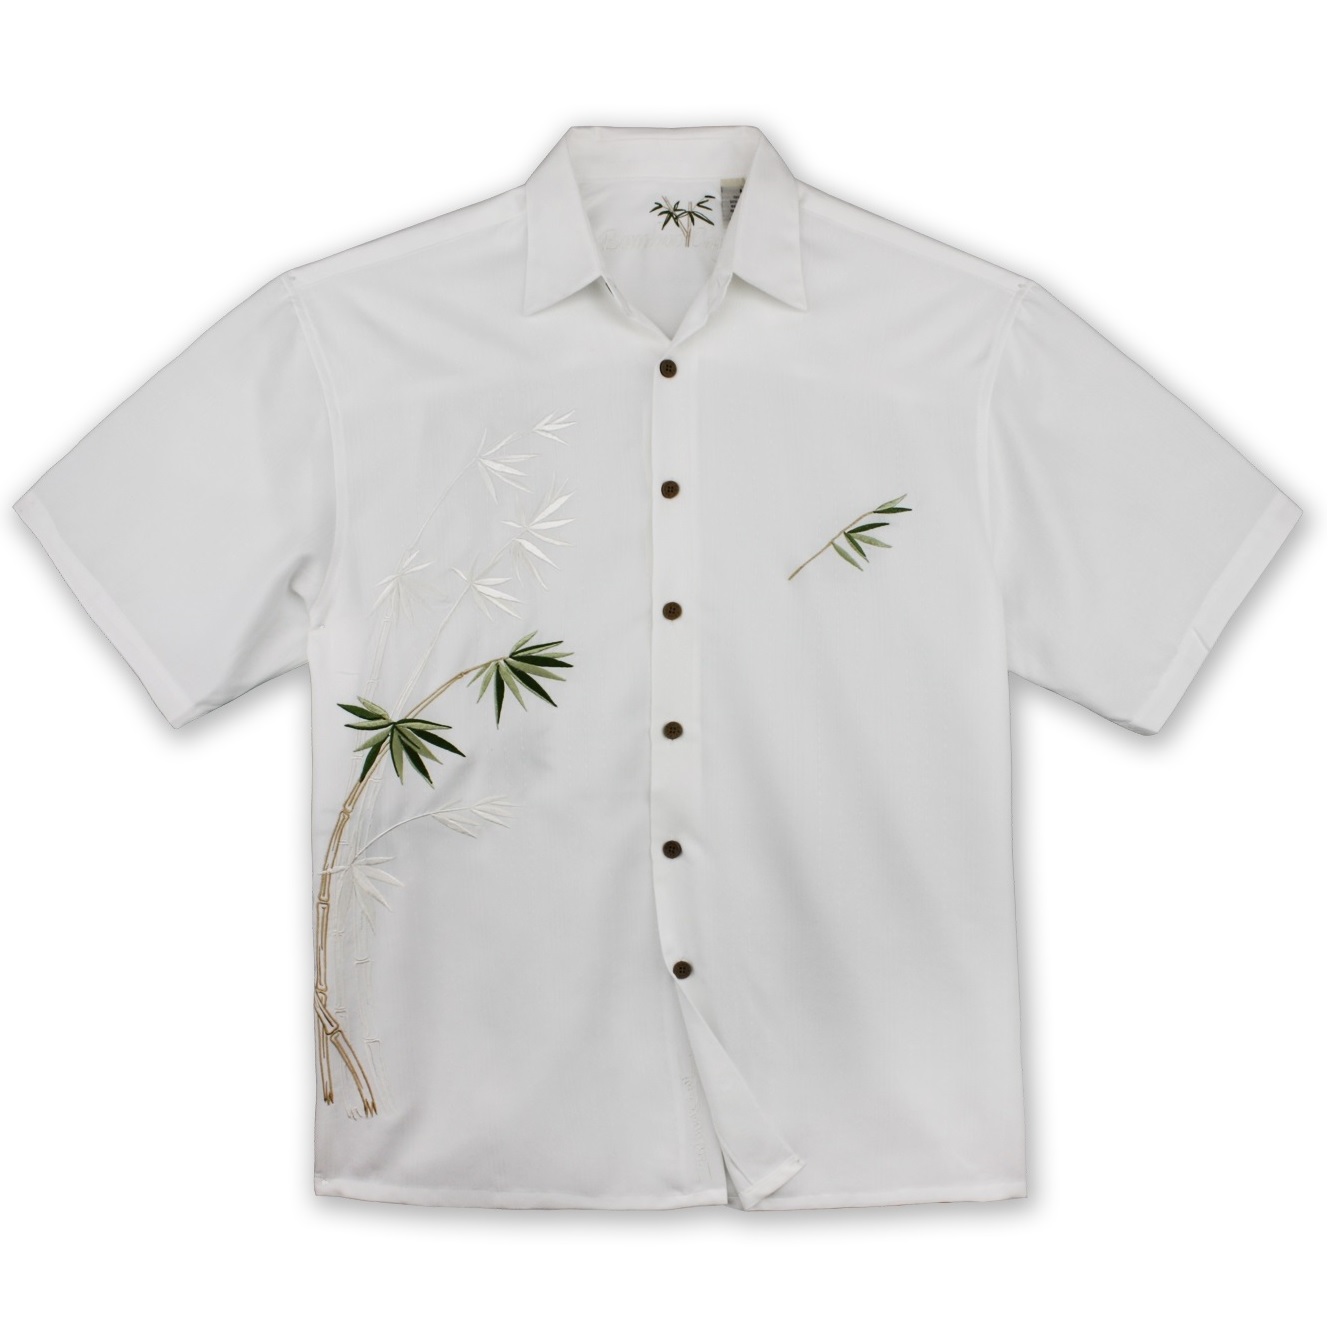 bamboo-cay-mens-tropical-resort-shirt-flying-bamboo-white